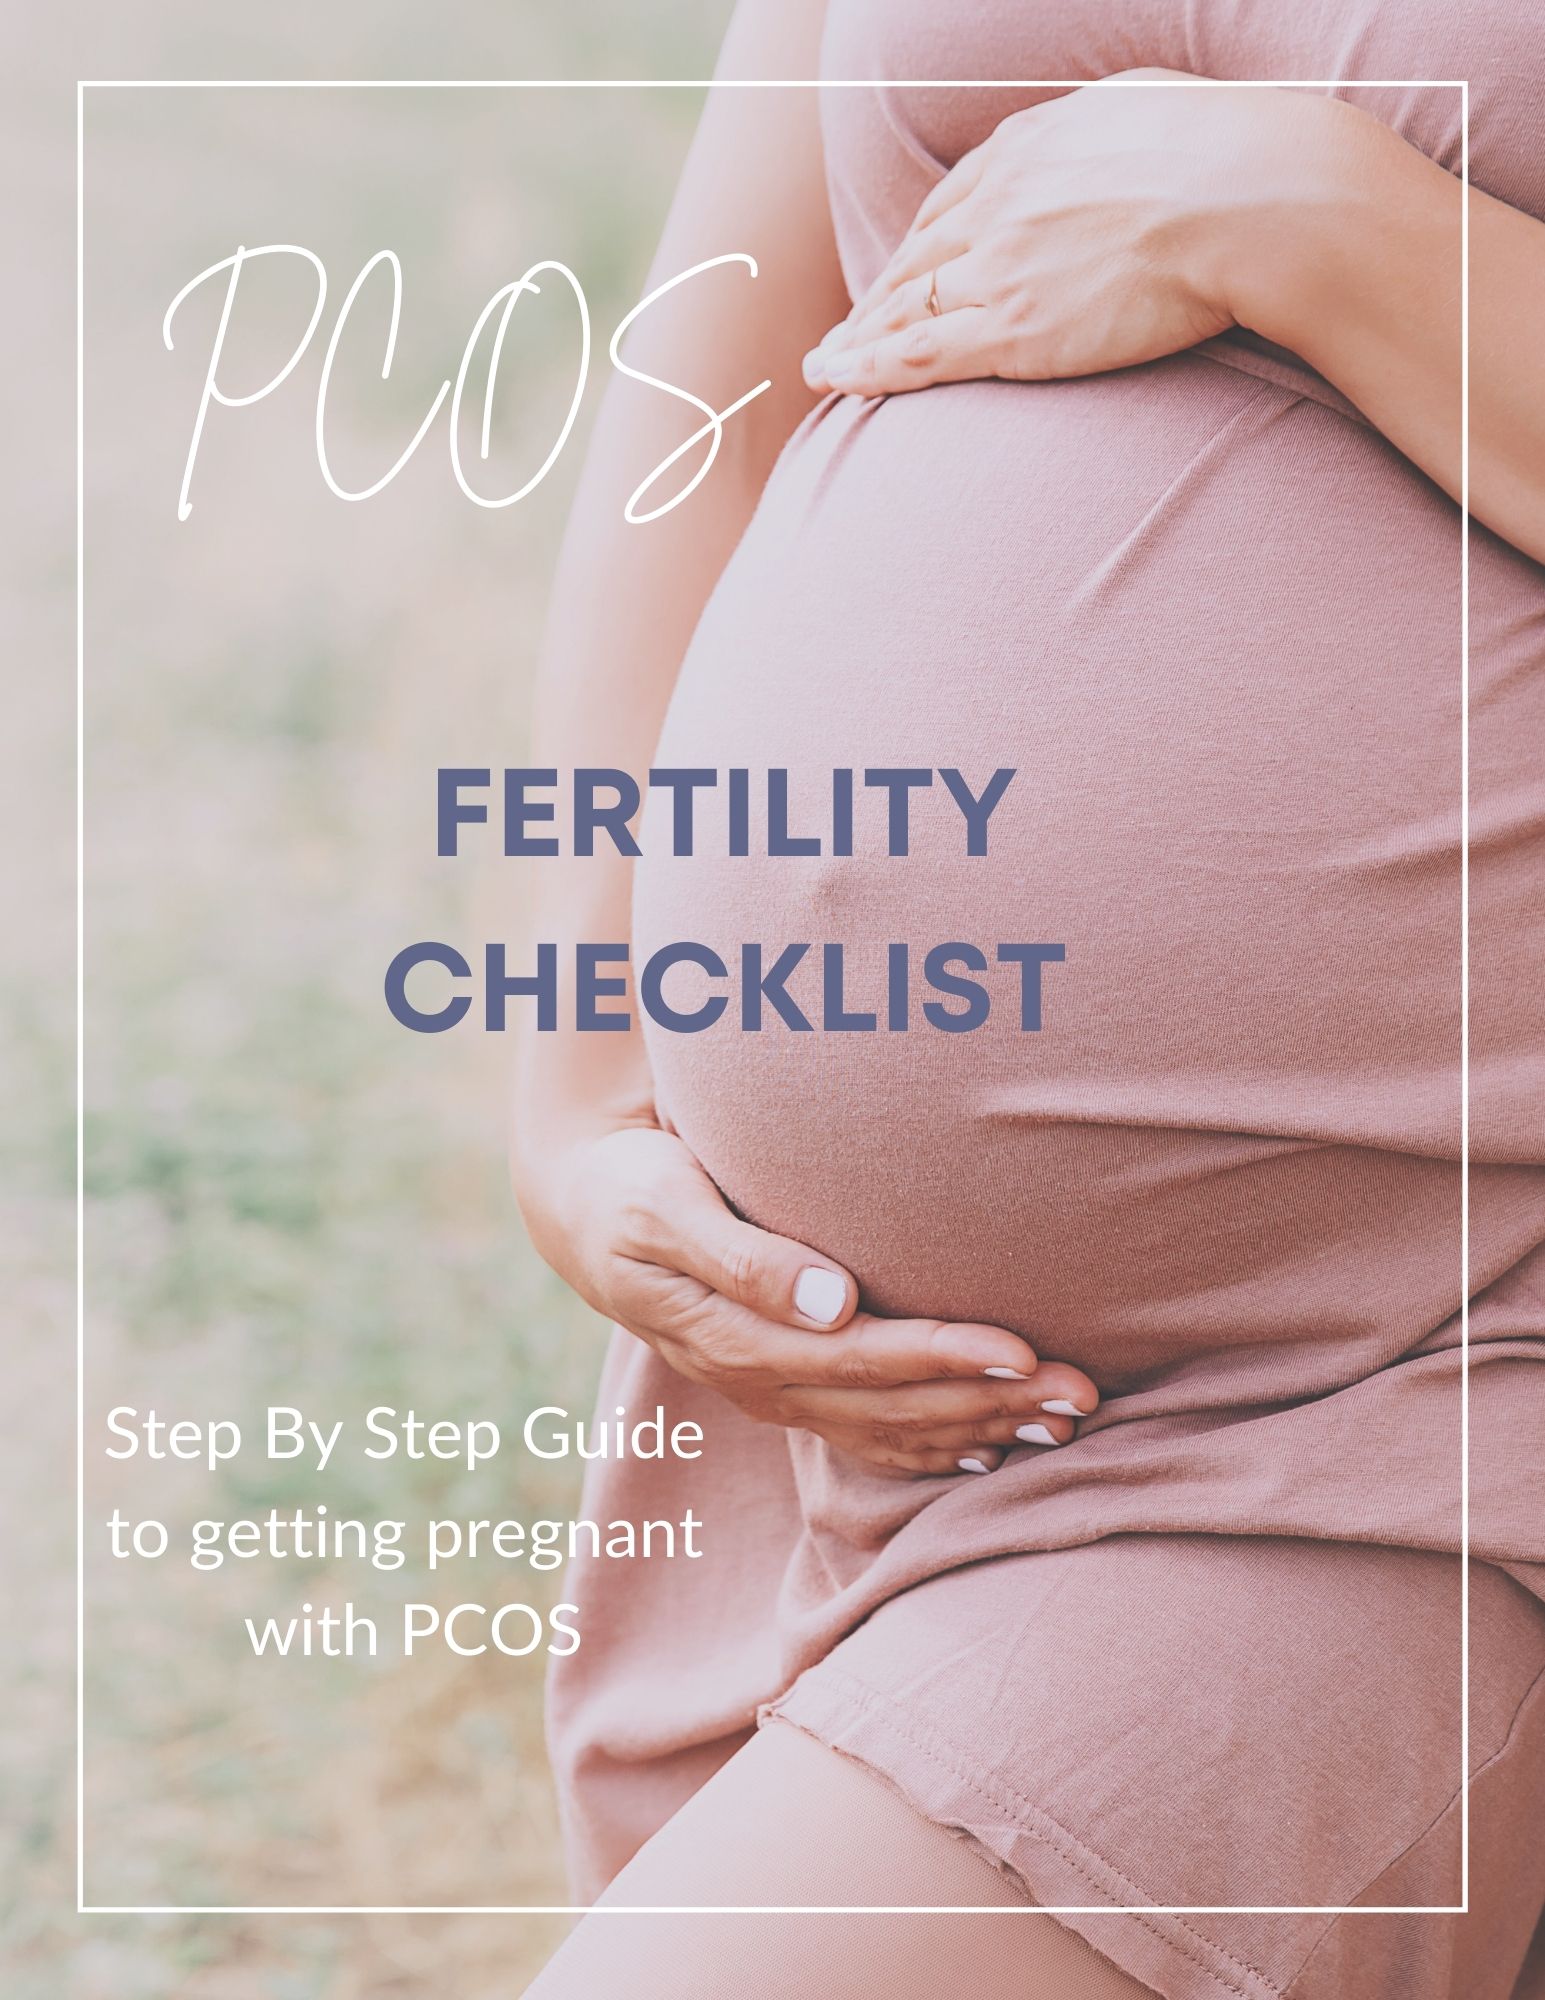 pcos fertility checklist cover